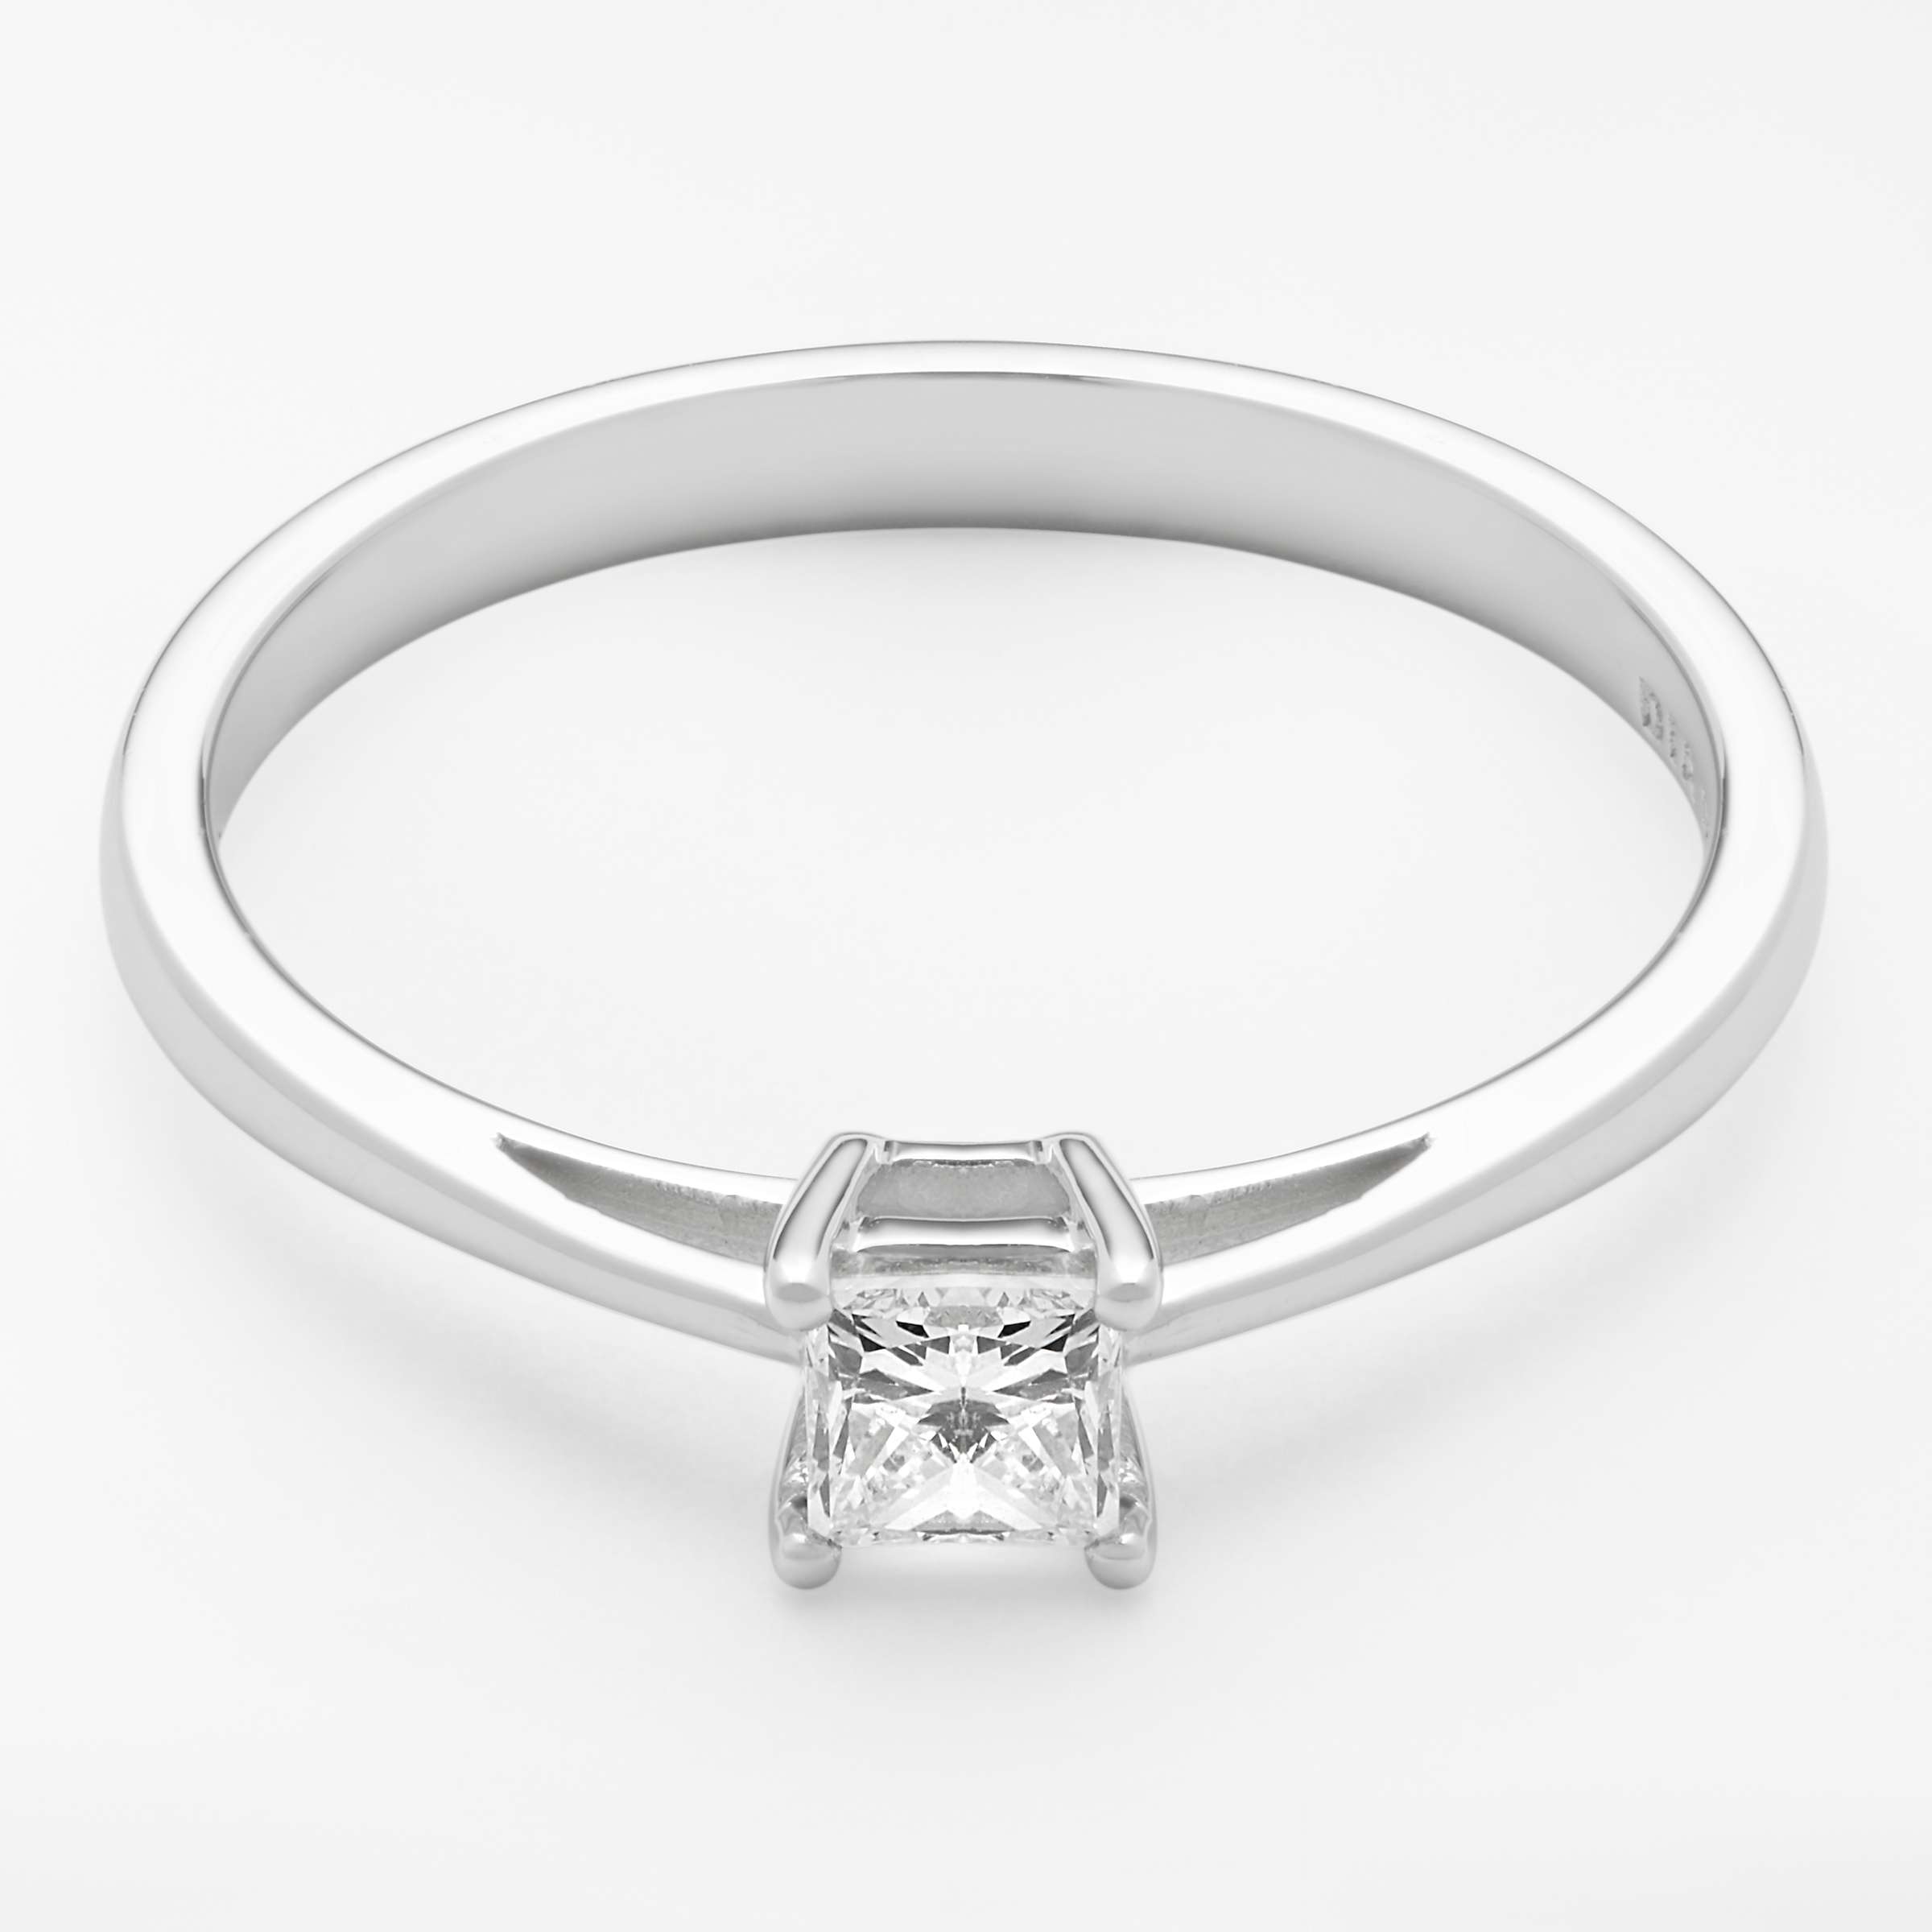 Buy Mogul 18ct White Gold Princess Cut Diamond Engagement Ring, 0.33ct Online at johnlewis.com